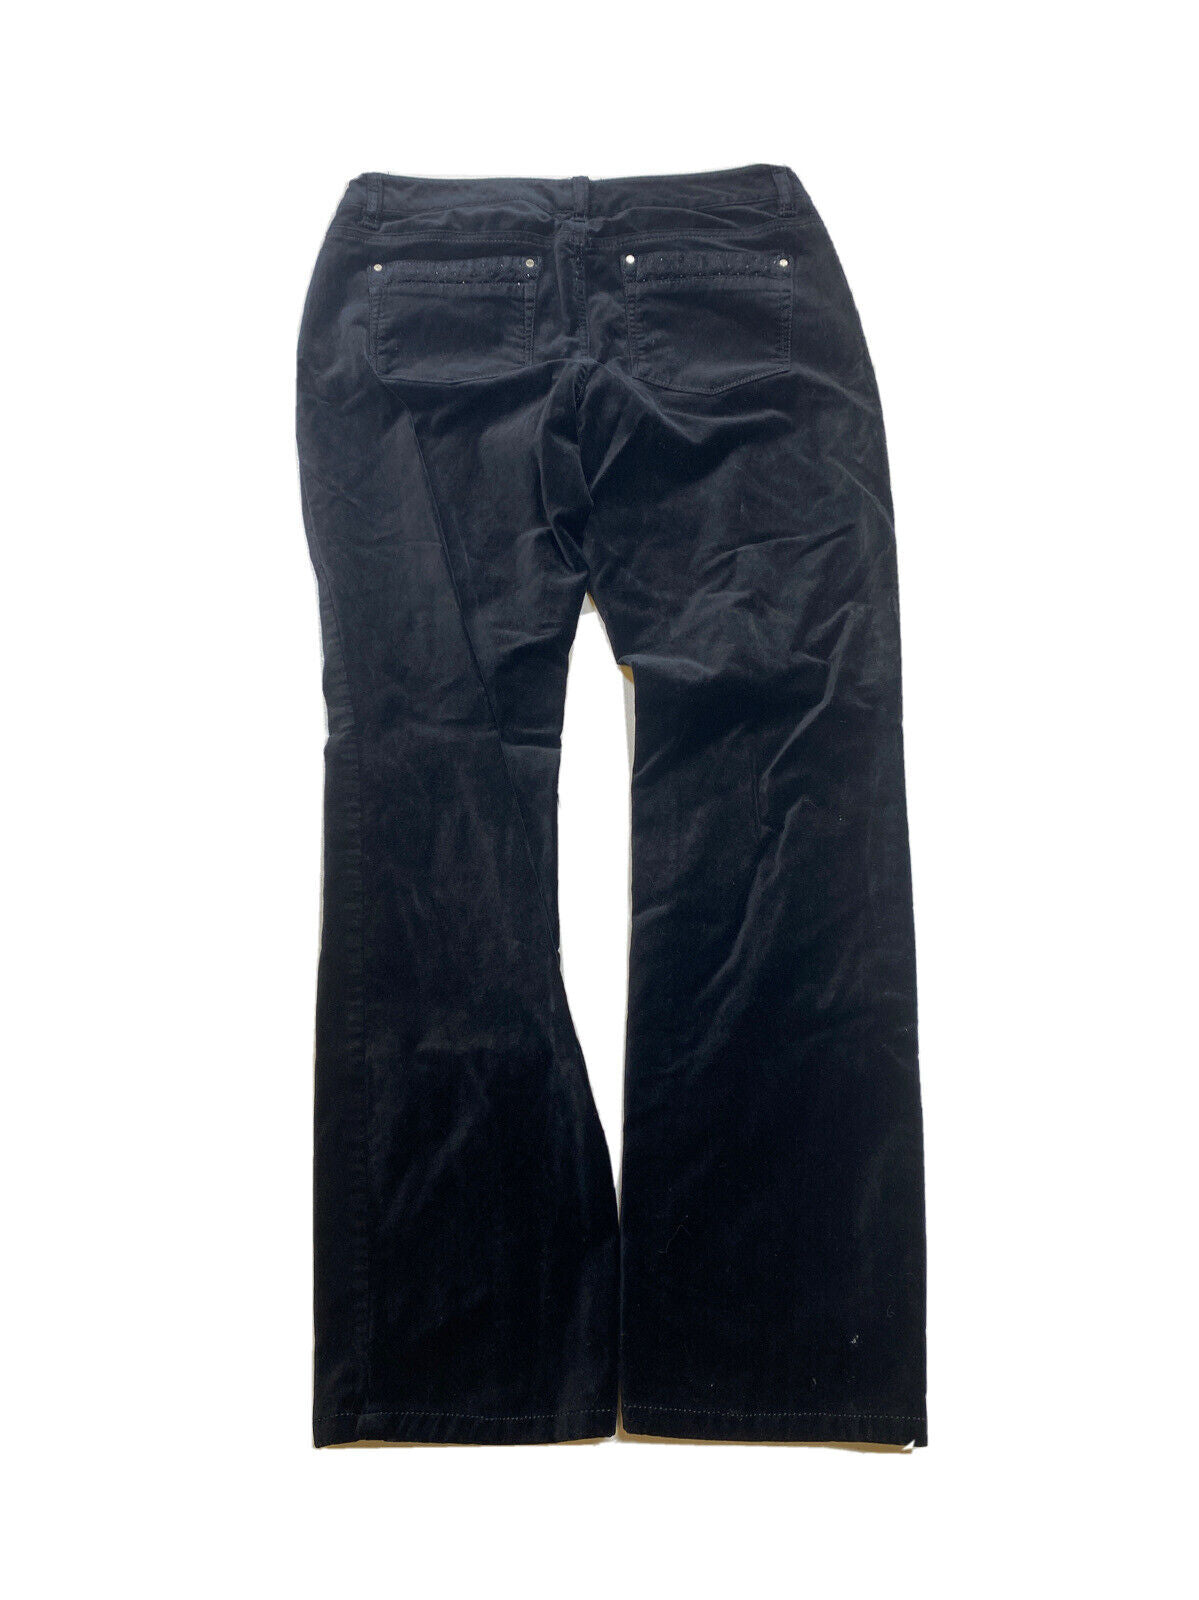 White House Black Market Pantalones de pierna delgada de terciopelo negro para mujer - 4 cortos